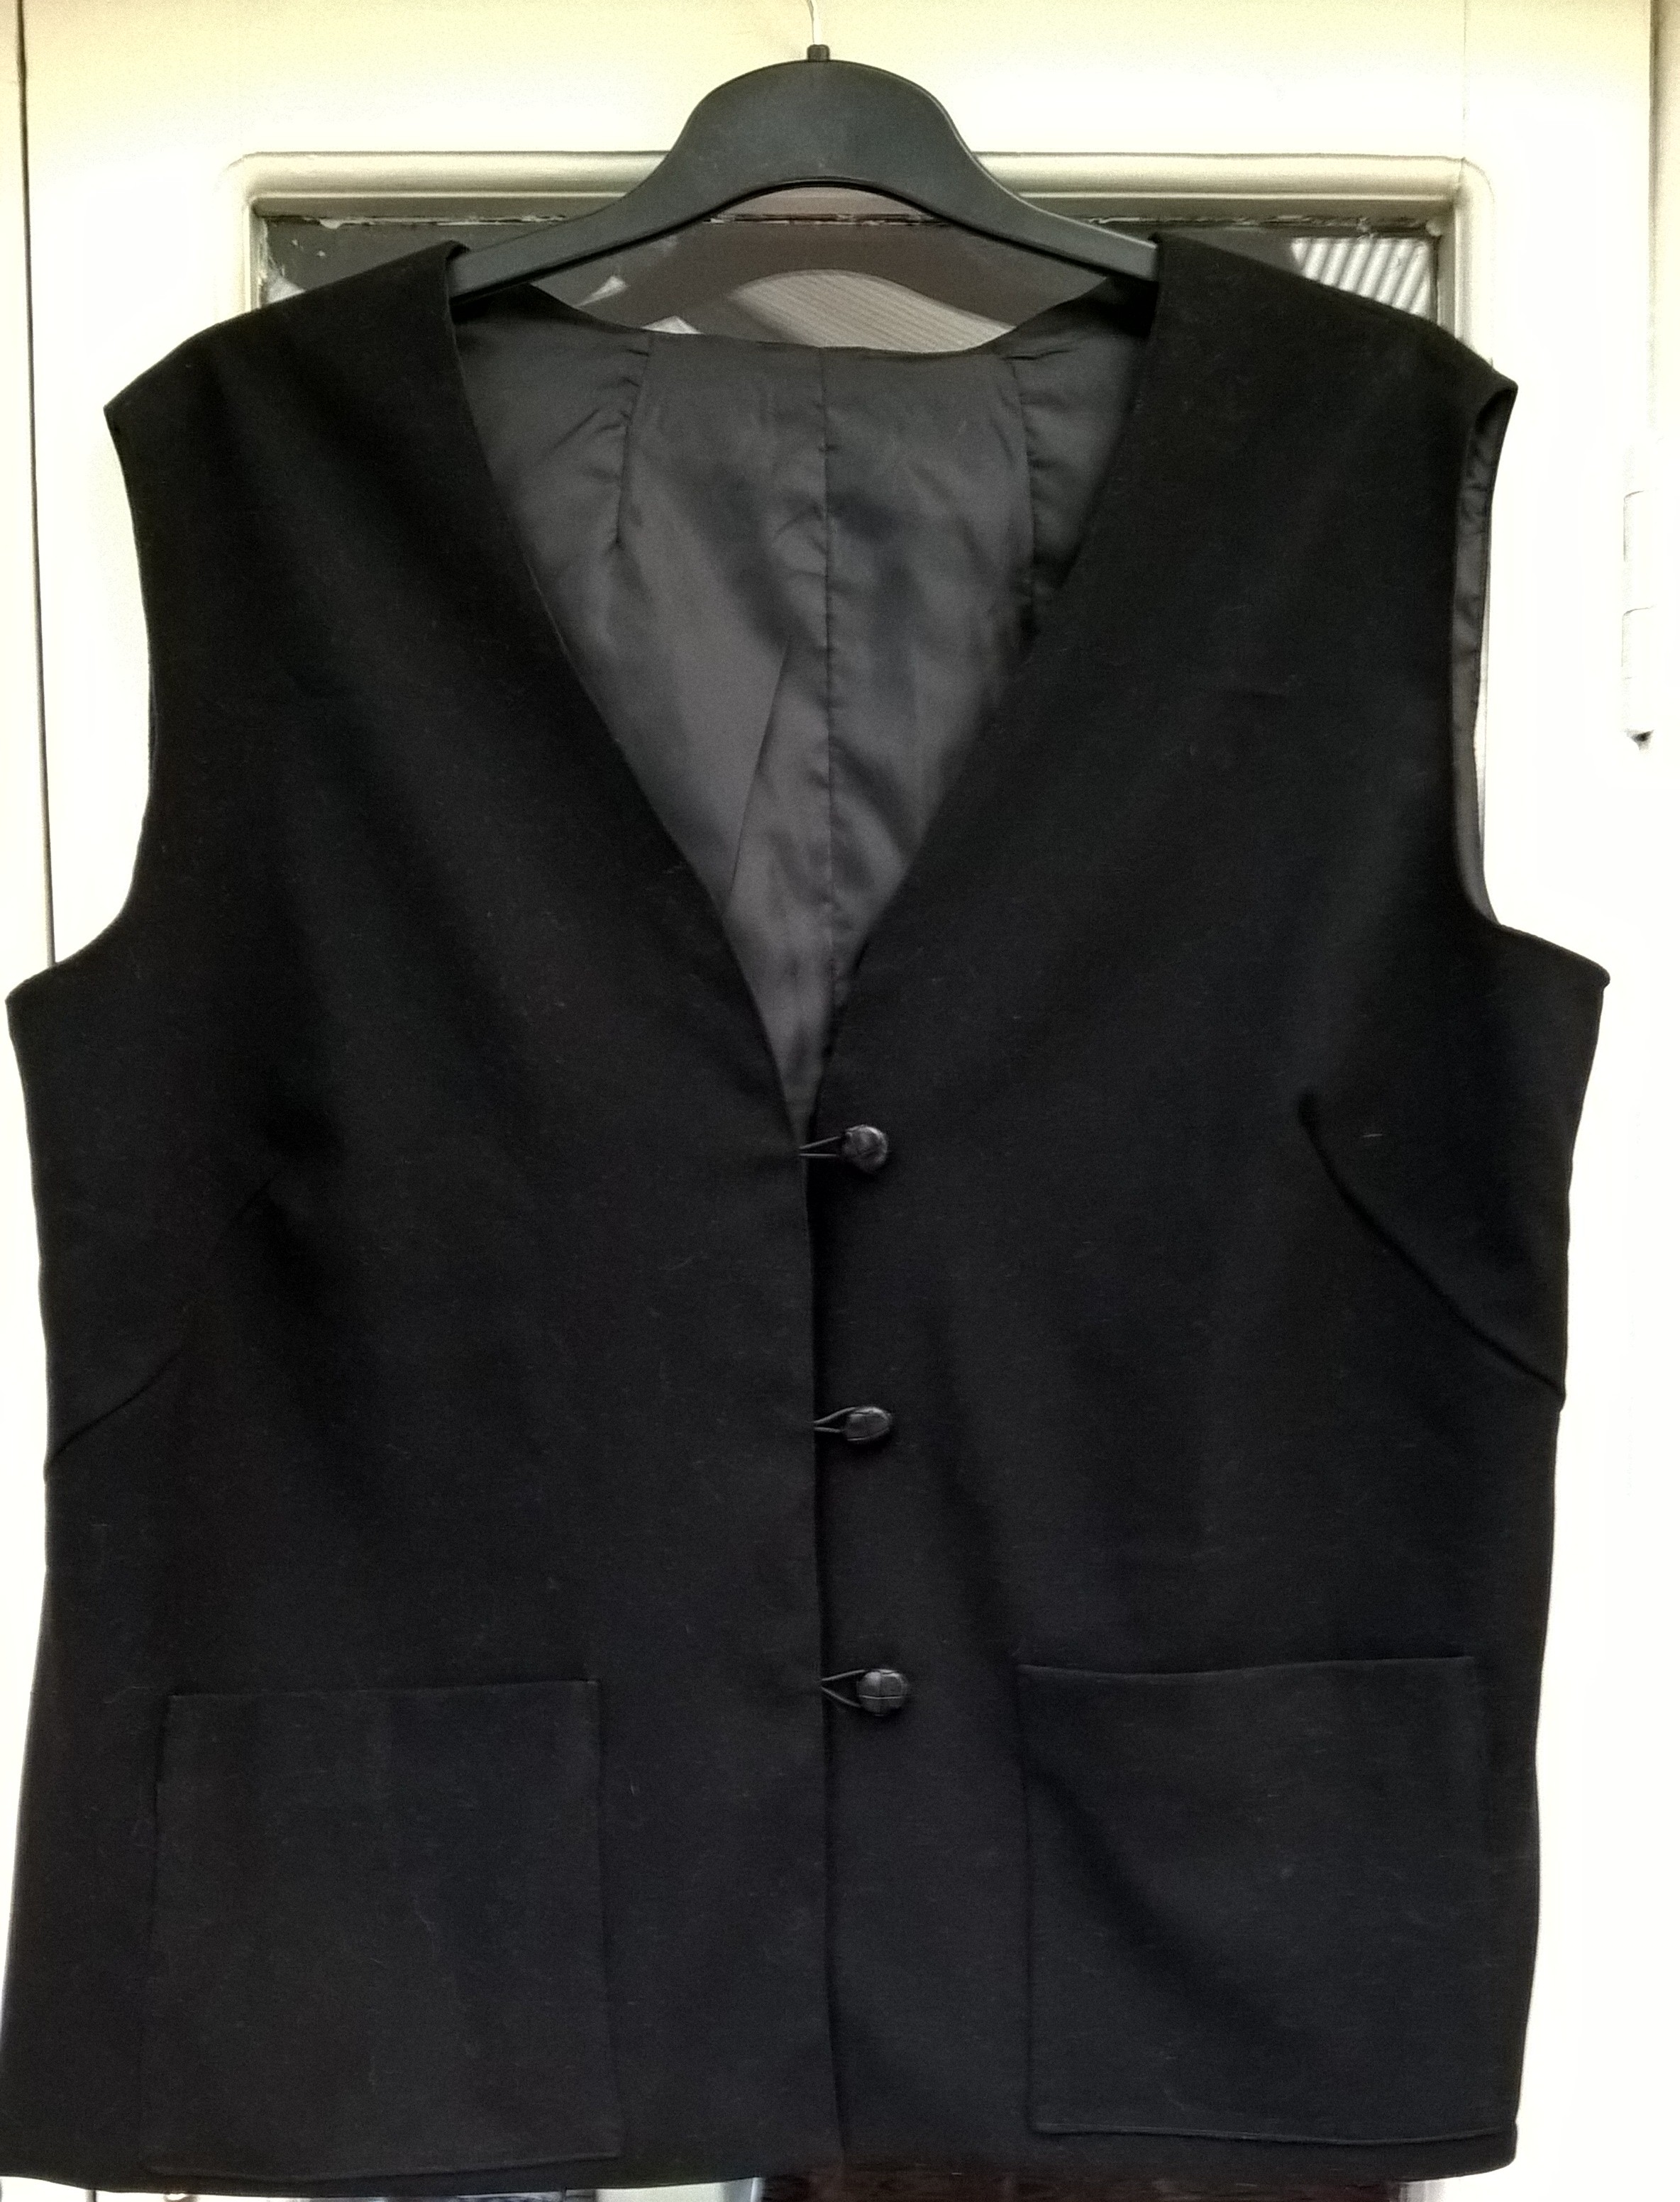 A made-to-measure waistcoat